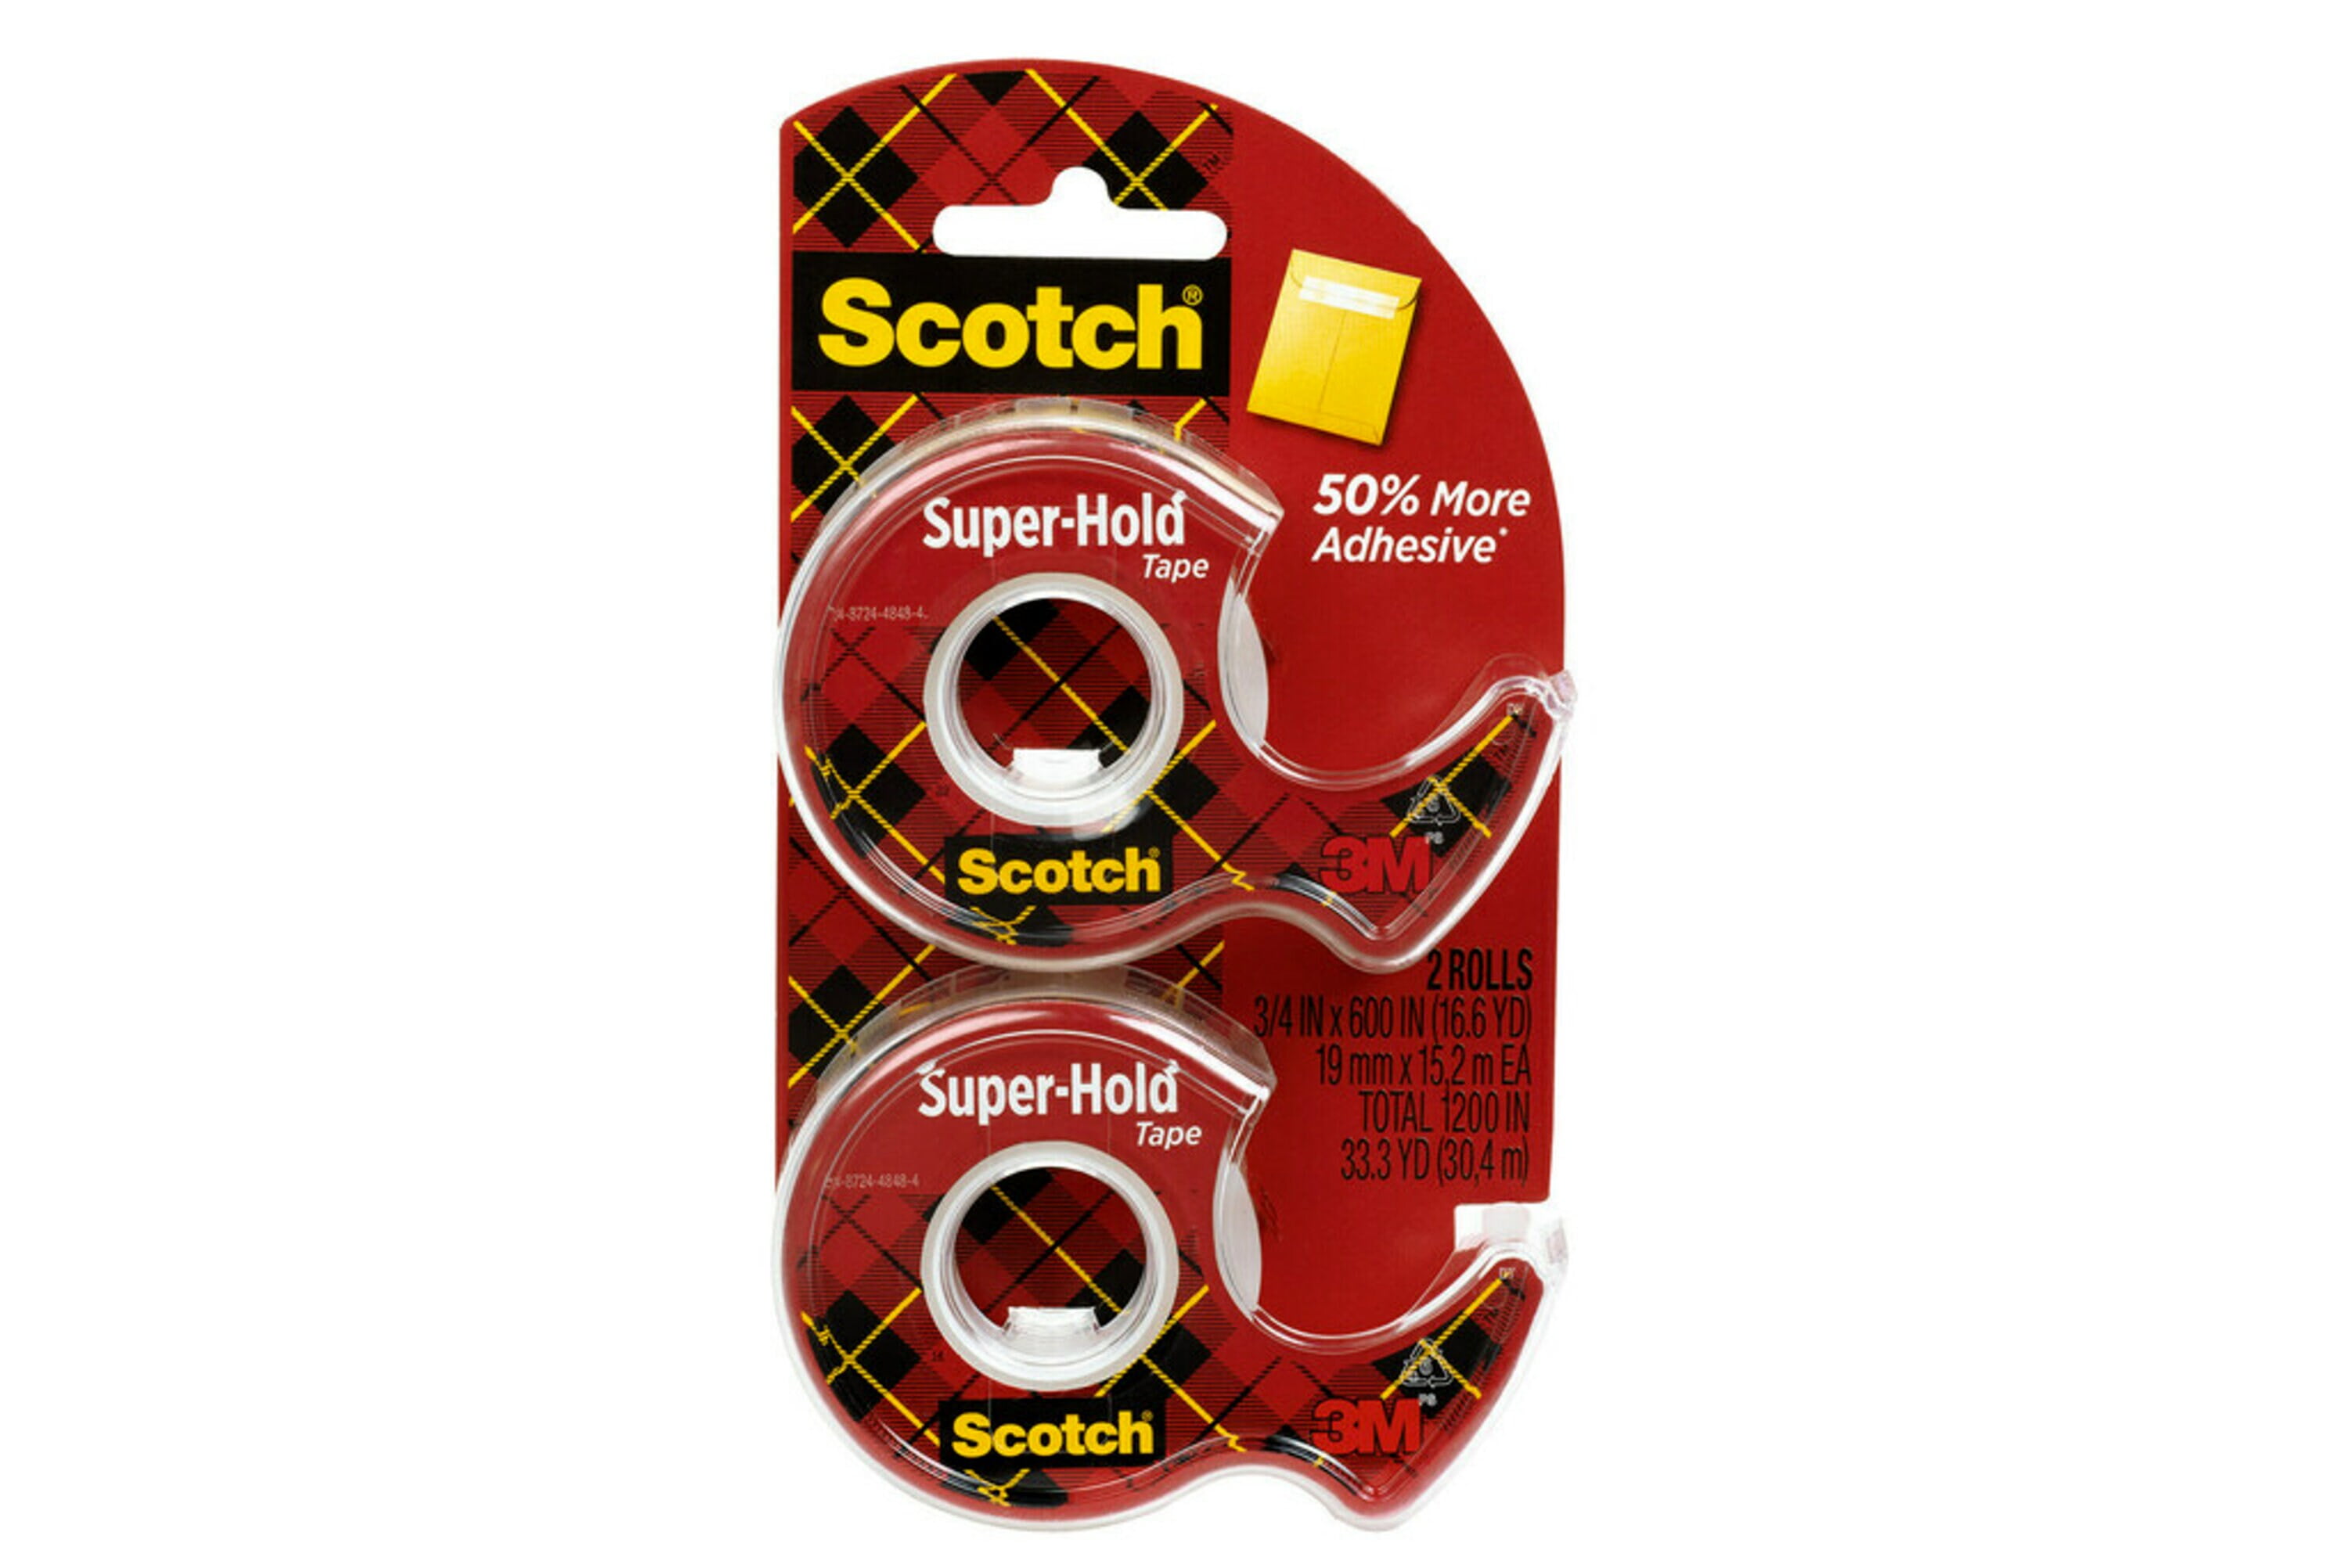 Scotch® Super-Hold Tape Dispensered Rolls